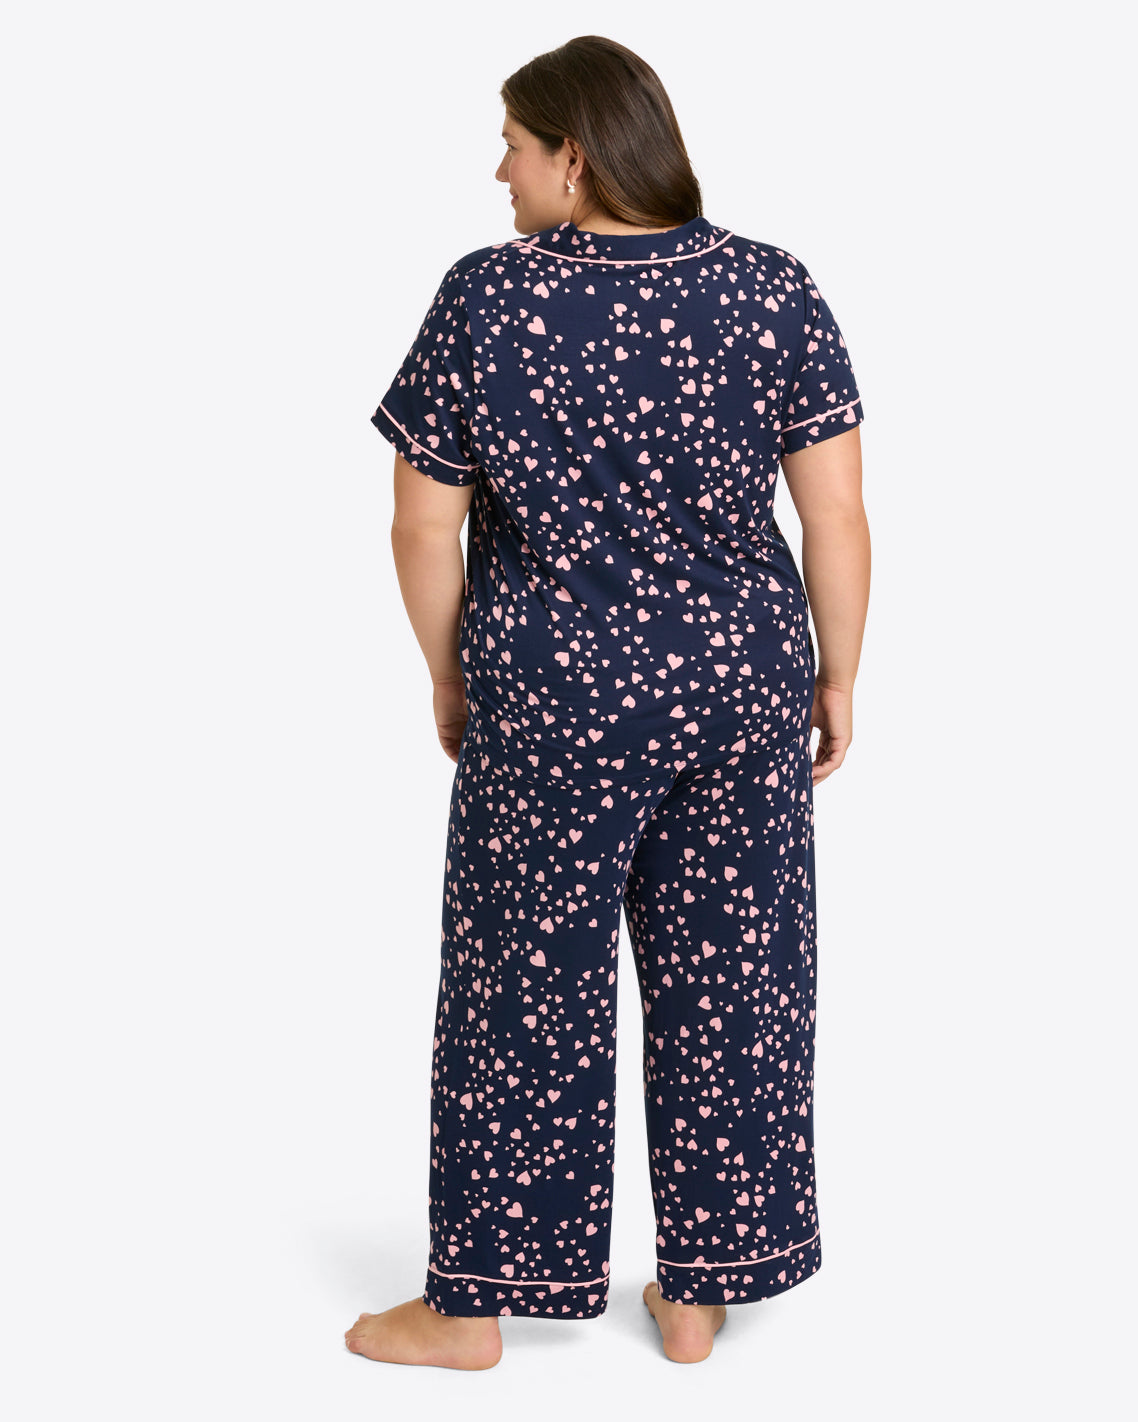 Linda Short Sleeve Pajama Set in Navy Hearts